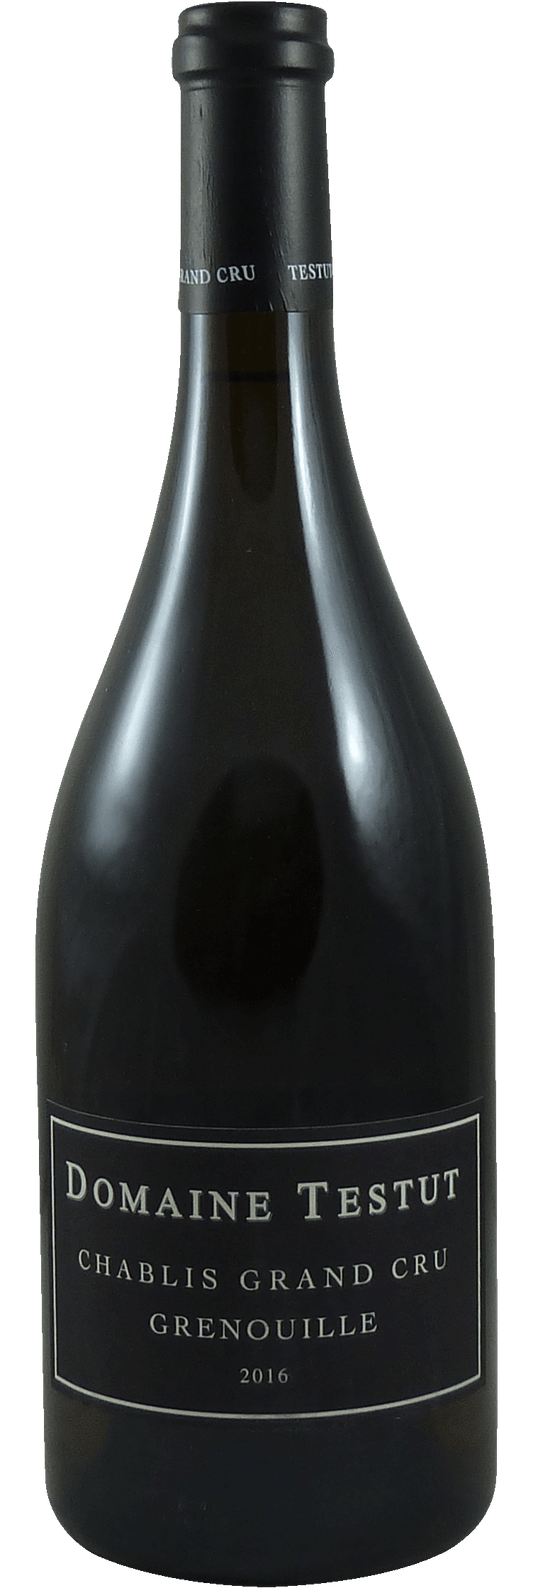 Domaine Testut Chablis Grand Cru Grenouille Blanc 2019 (1x75cl) - TwoMoreGlasses.com